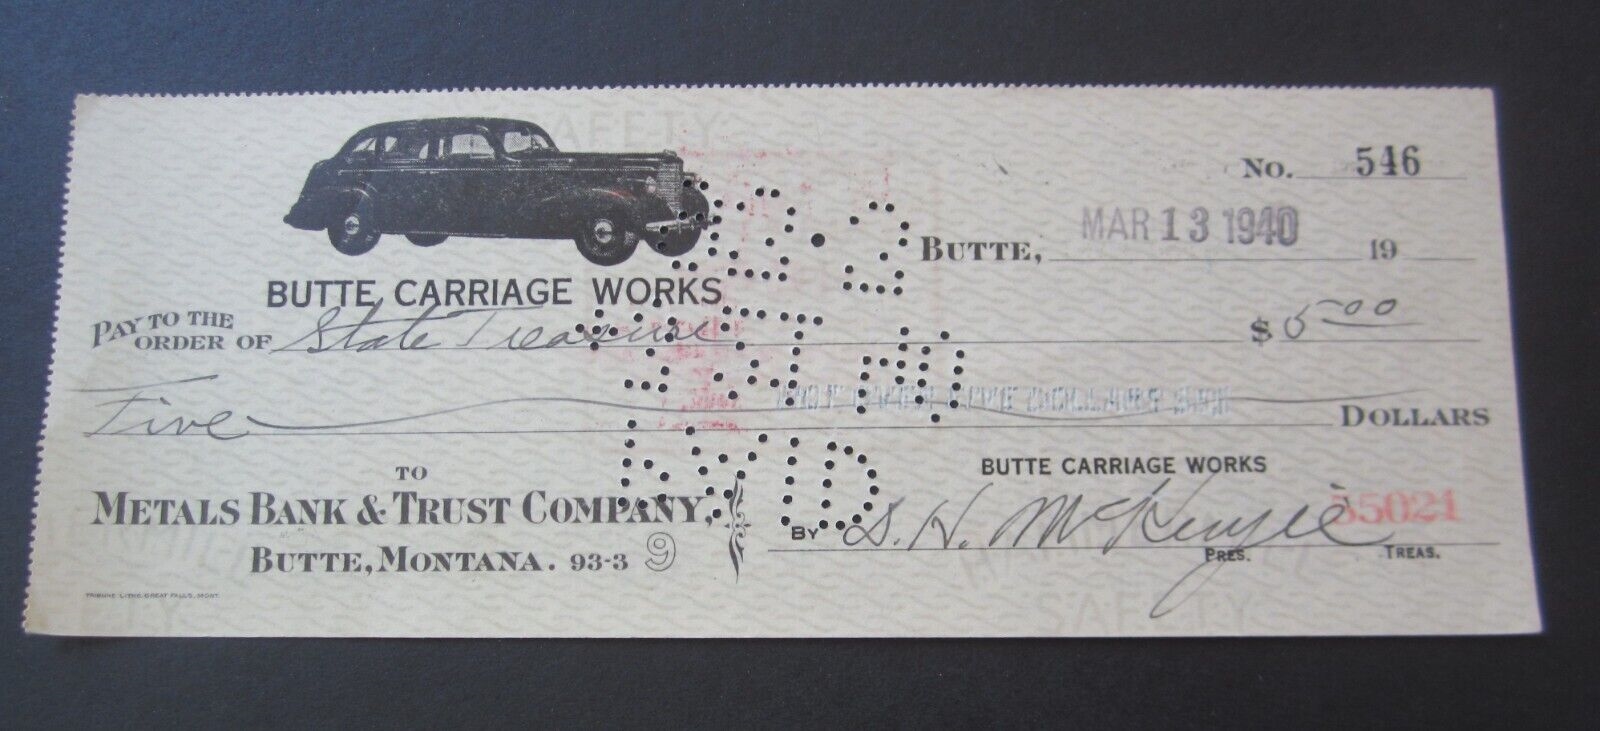 Old Vintage 1940 - BUTTE CARRIAGE WORKS - Bank ...